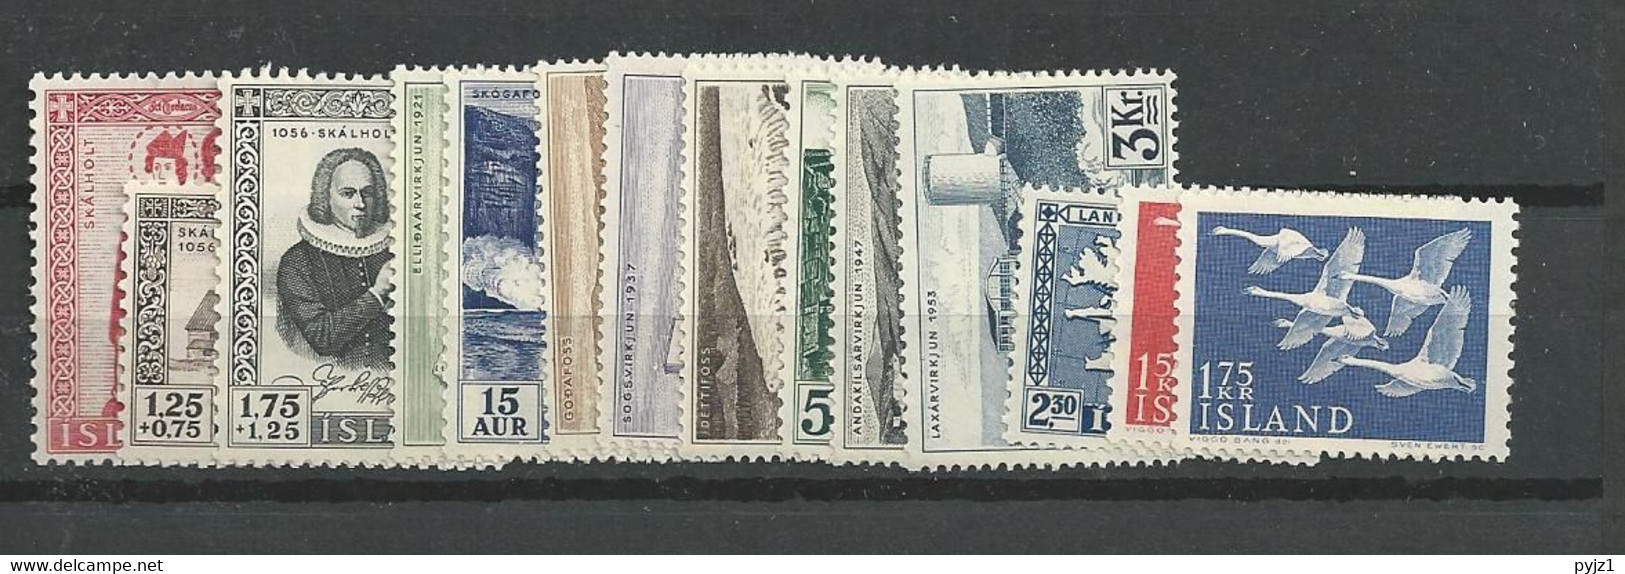 1956 MNH Iceland, Year Complete, Postfris** - Volledig Jaar